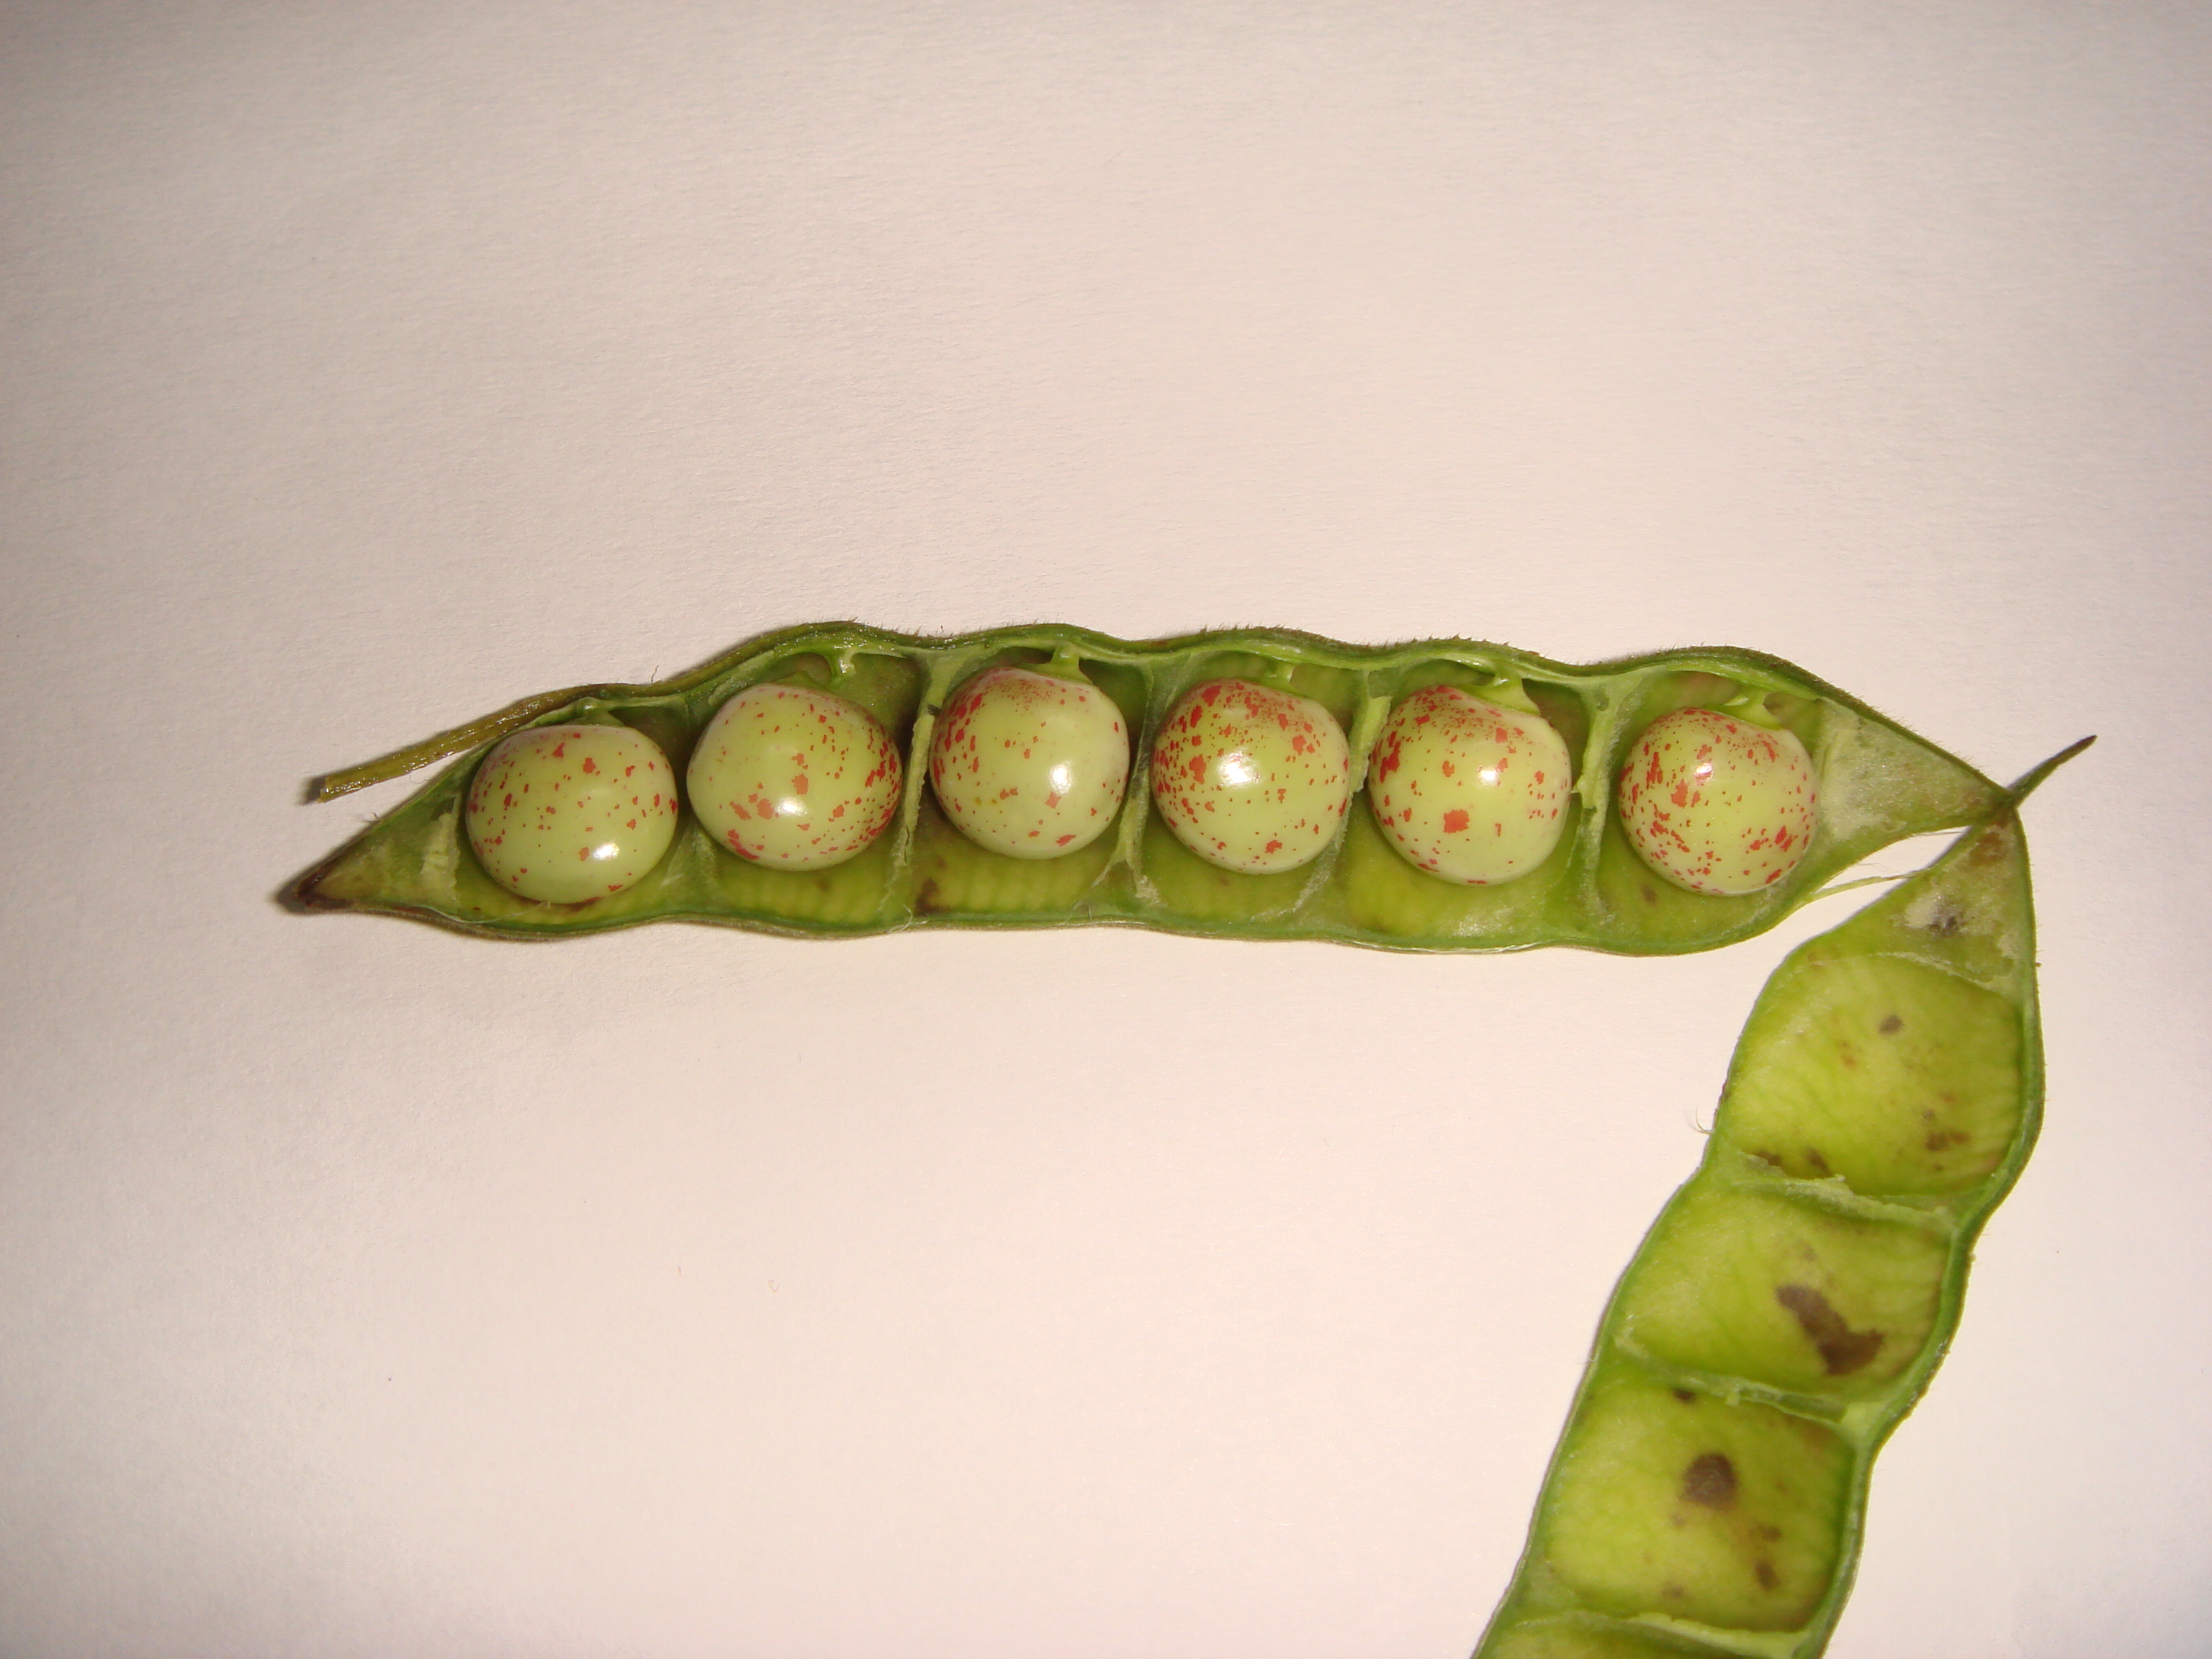 Green peas photo